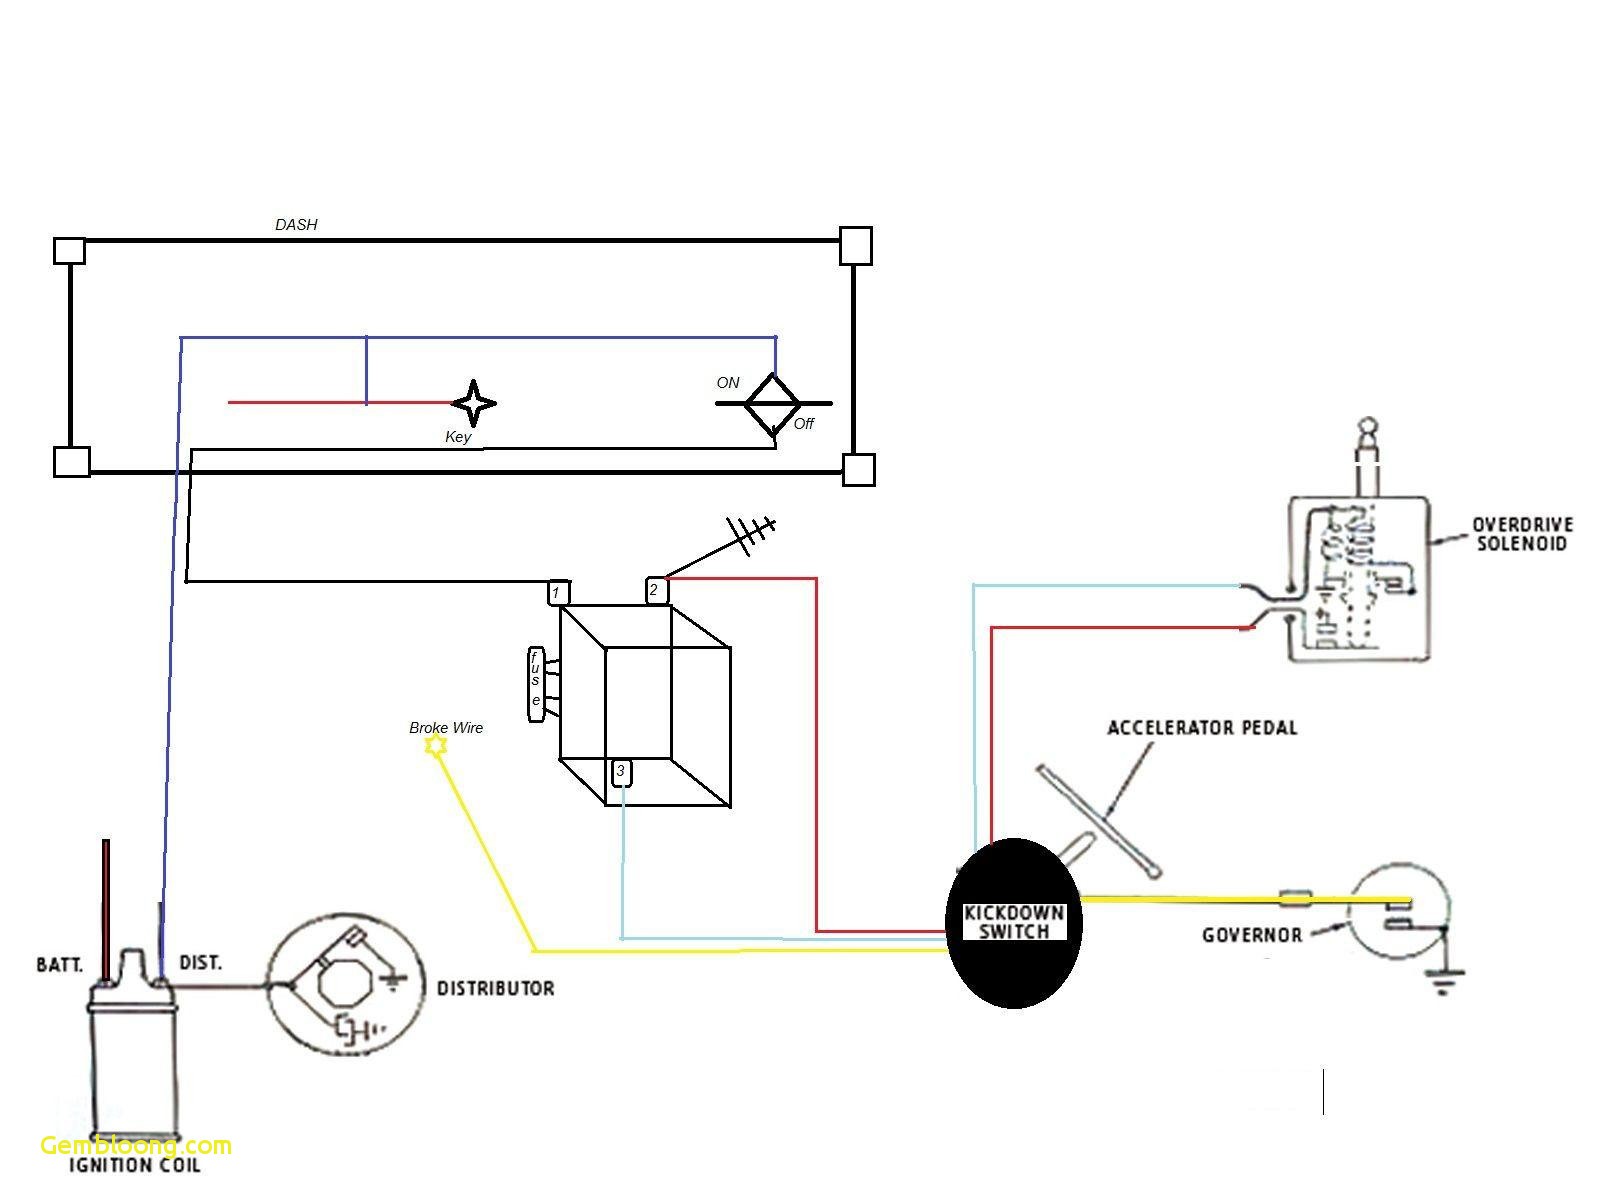 One Wire Alternator Diagram Download ford Trucks Wiring Diagrams Audi A4 Alternator Wiring Of One Wire Alternator Diagram